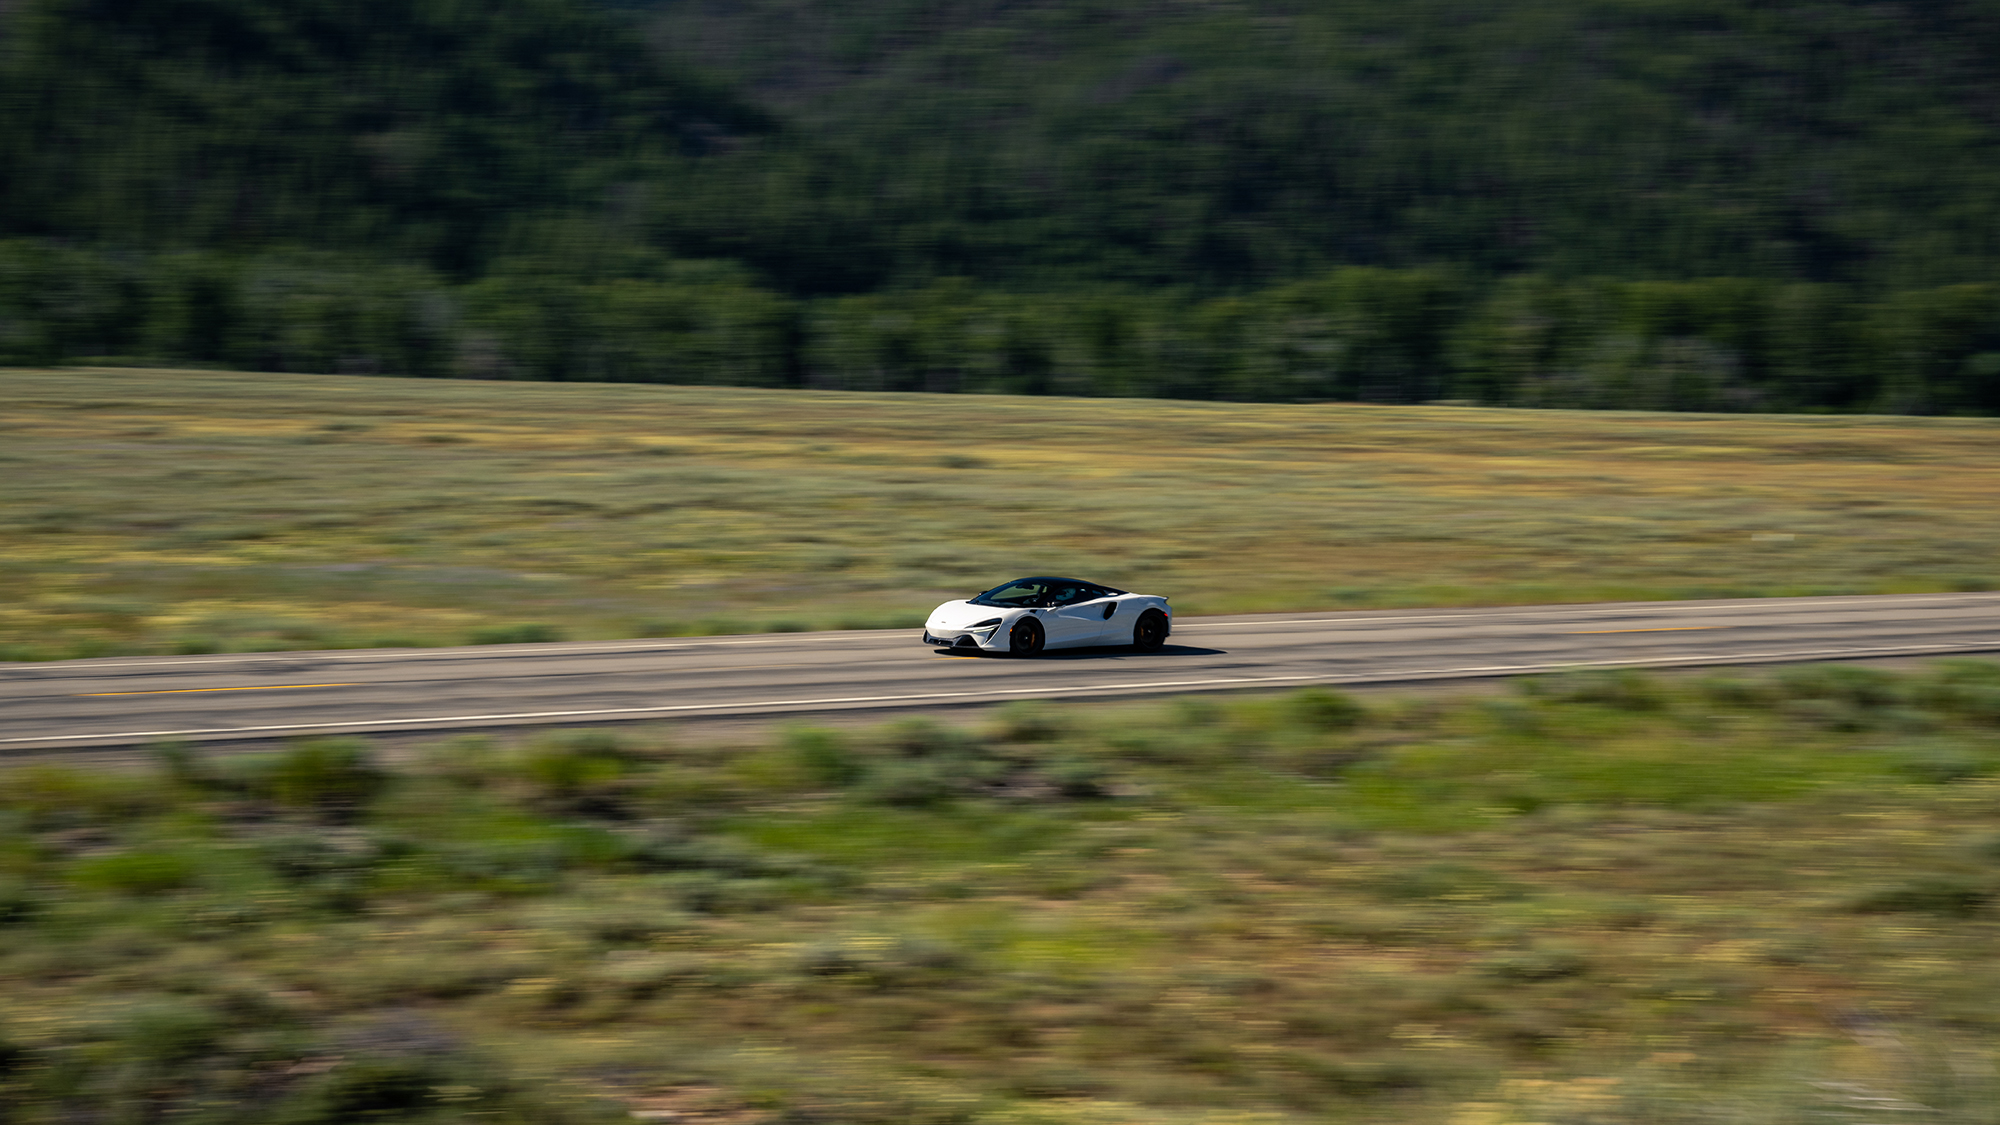 Steam Workshop::Gran Turismo 4 Ford GT LM Race Car Spec ll Skin